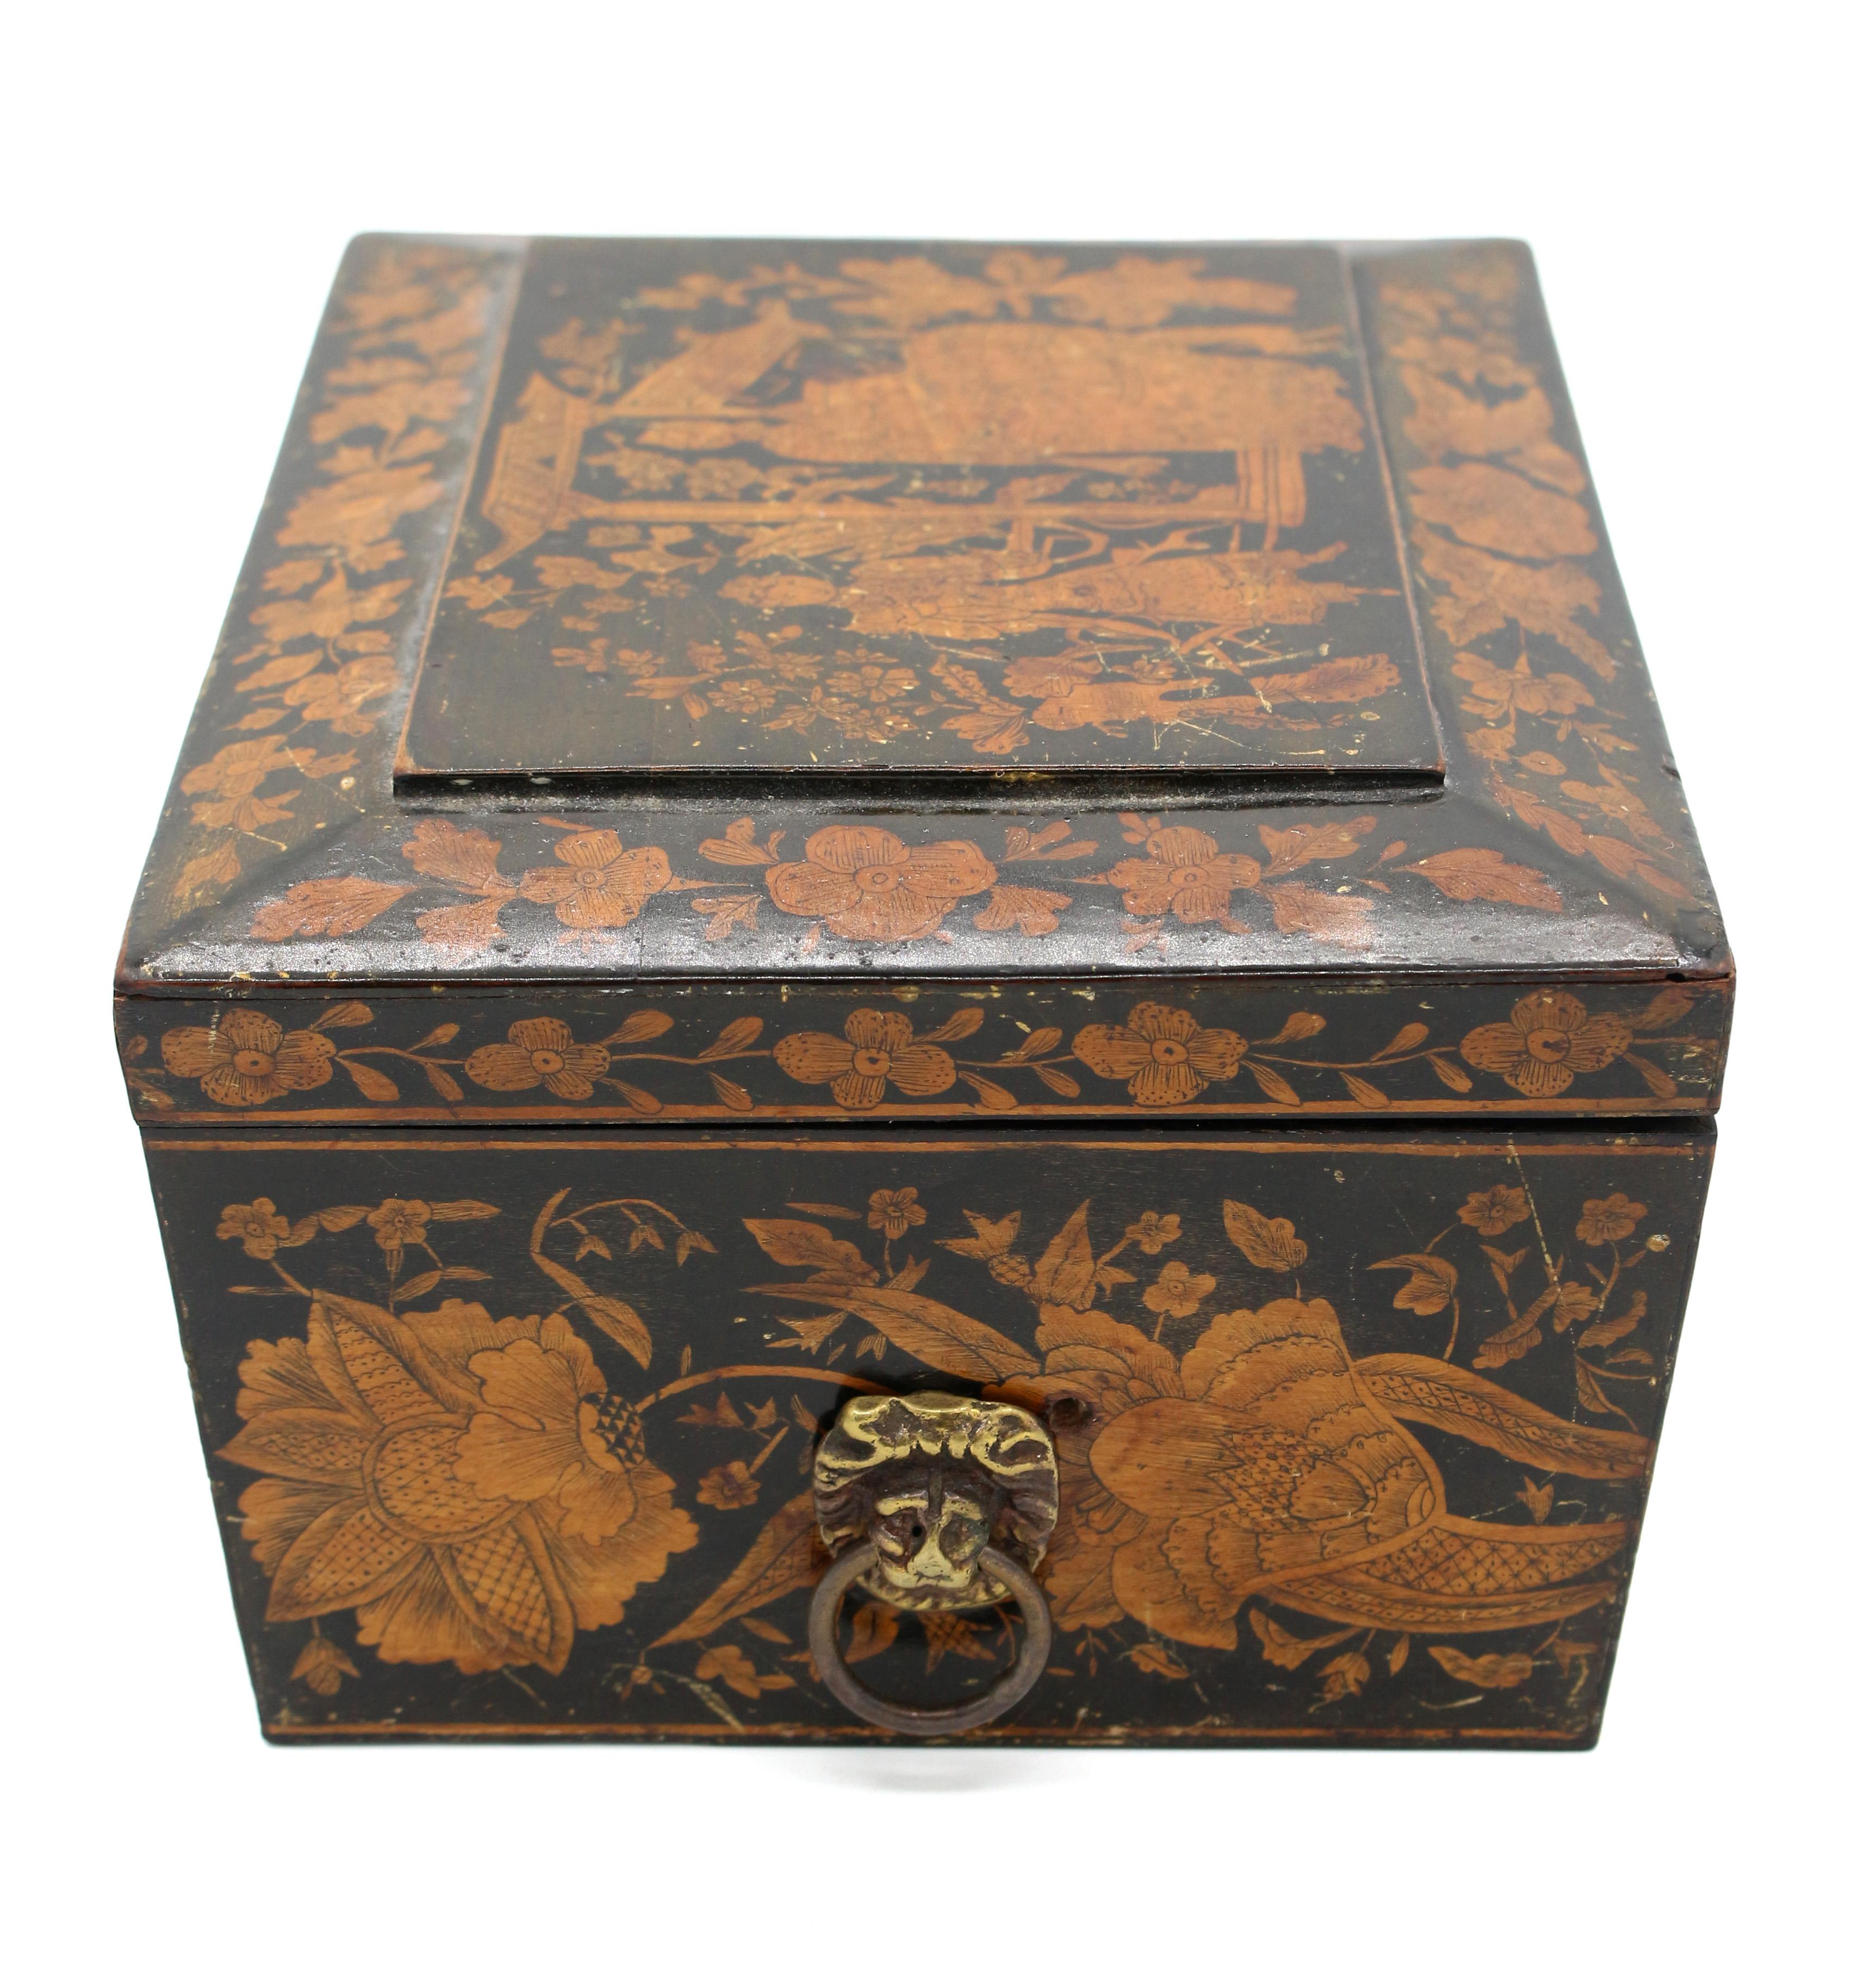 Circa 1830s English Regency to George IV Penwork Box For Sale 2